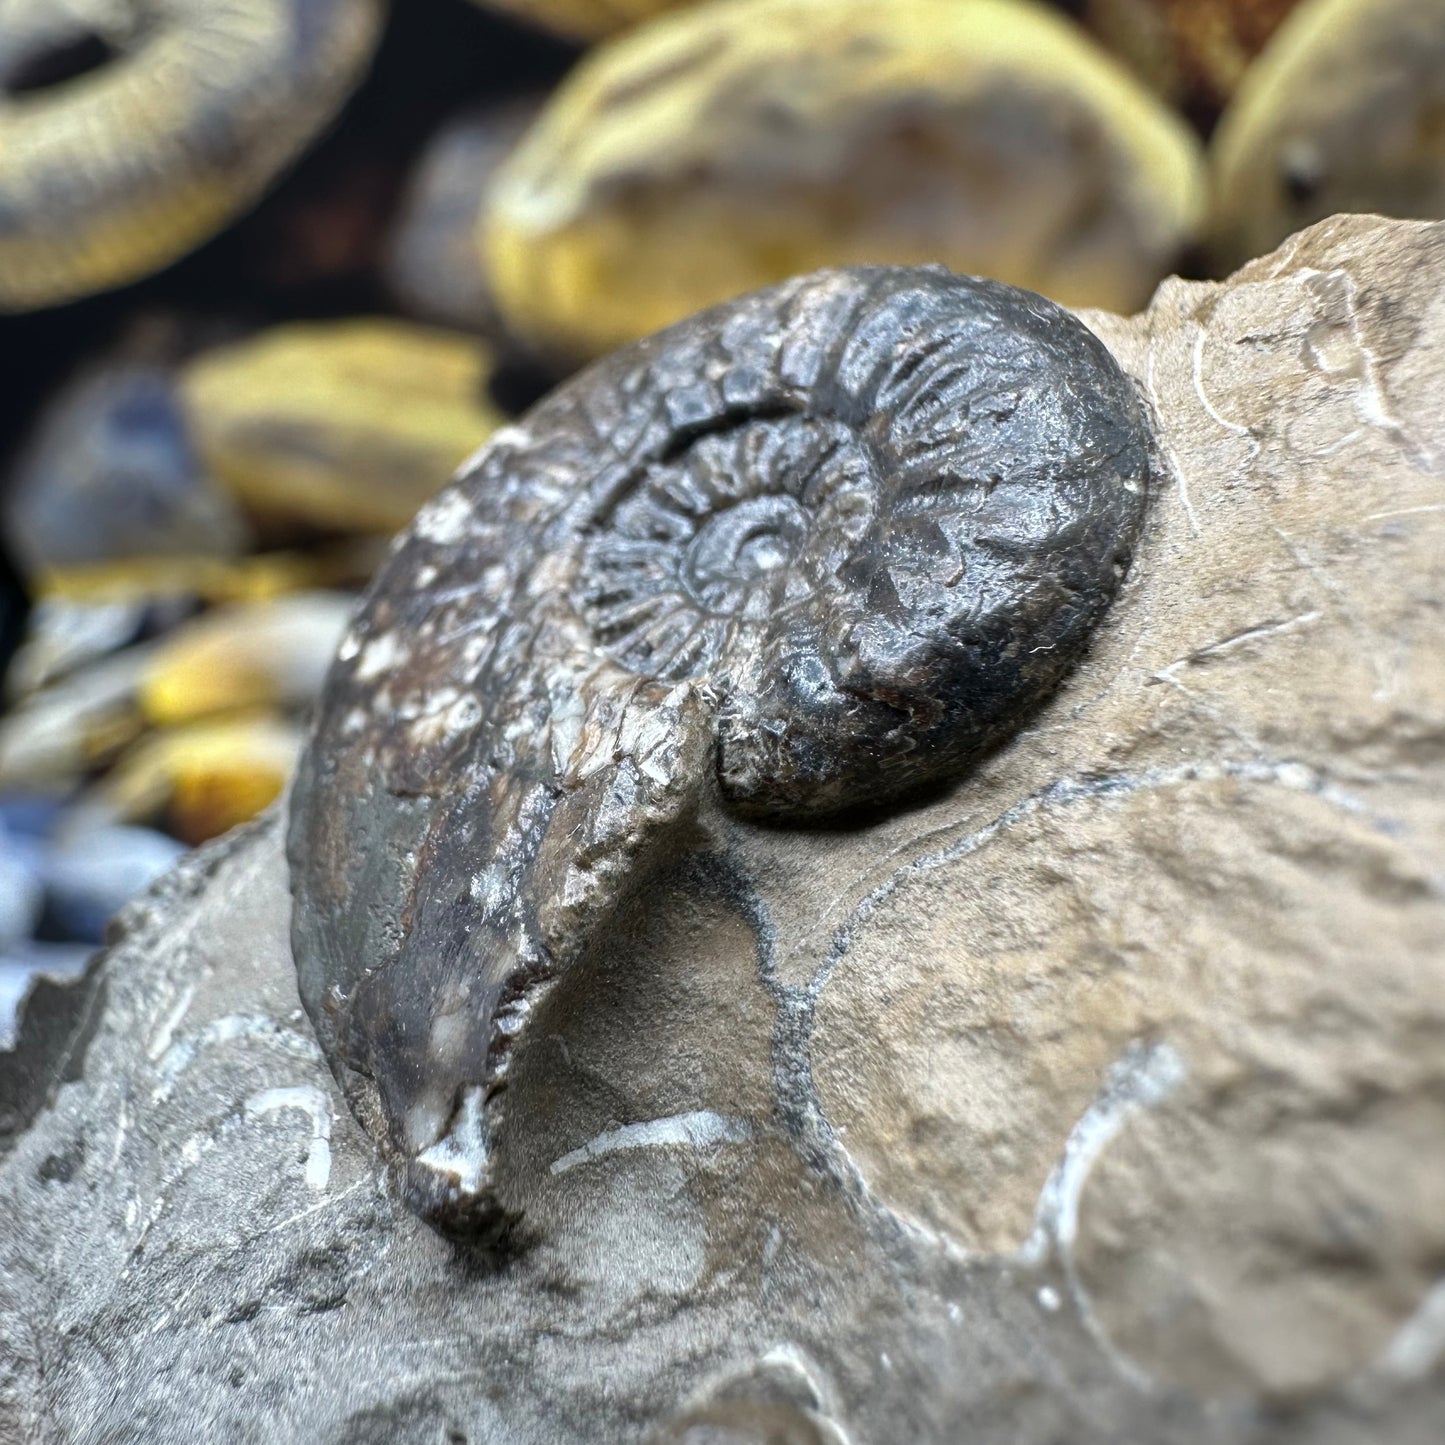 Amaltheus striatus ammonite fossil - Whitby, North Yorkshire